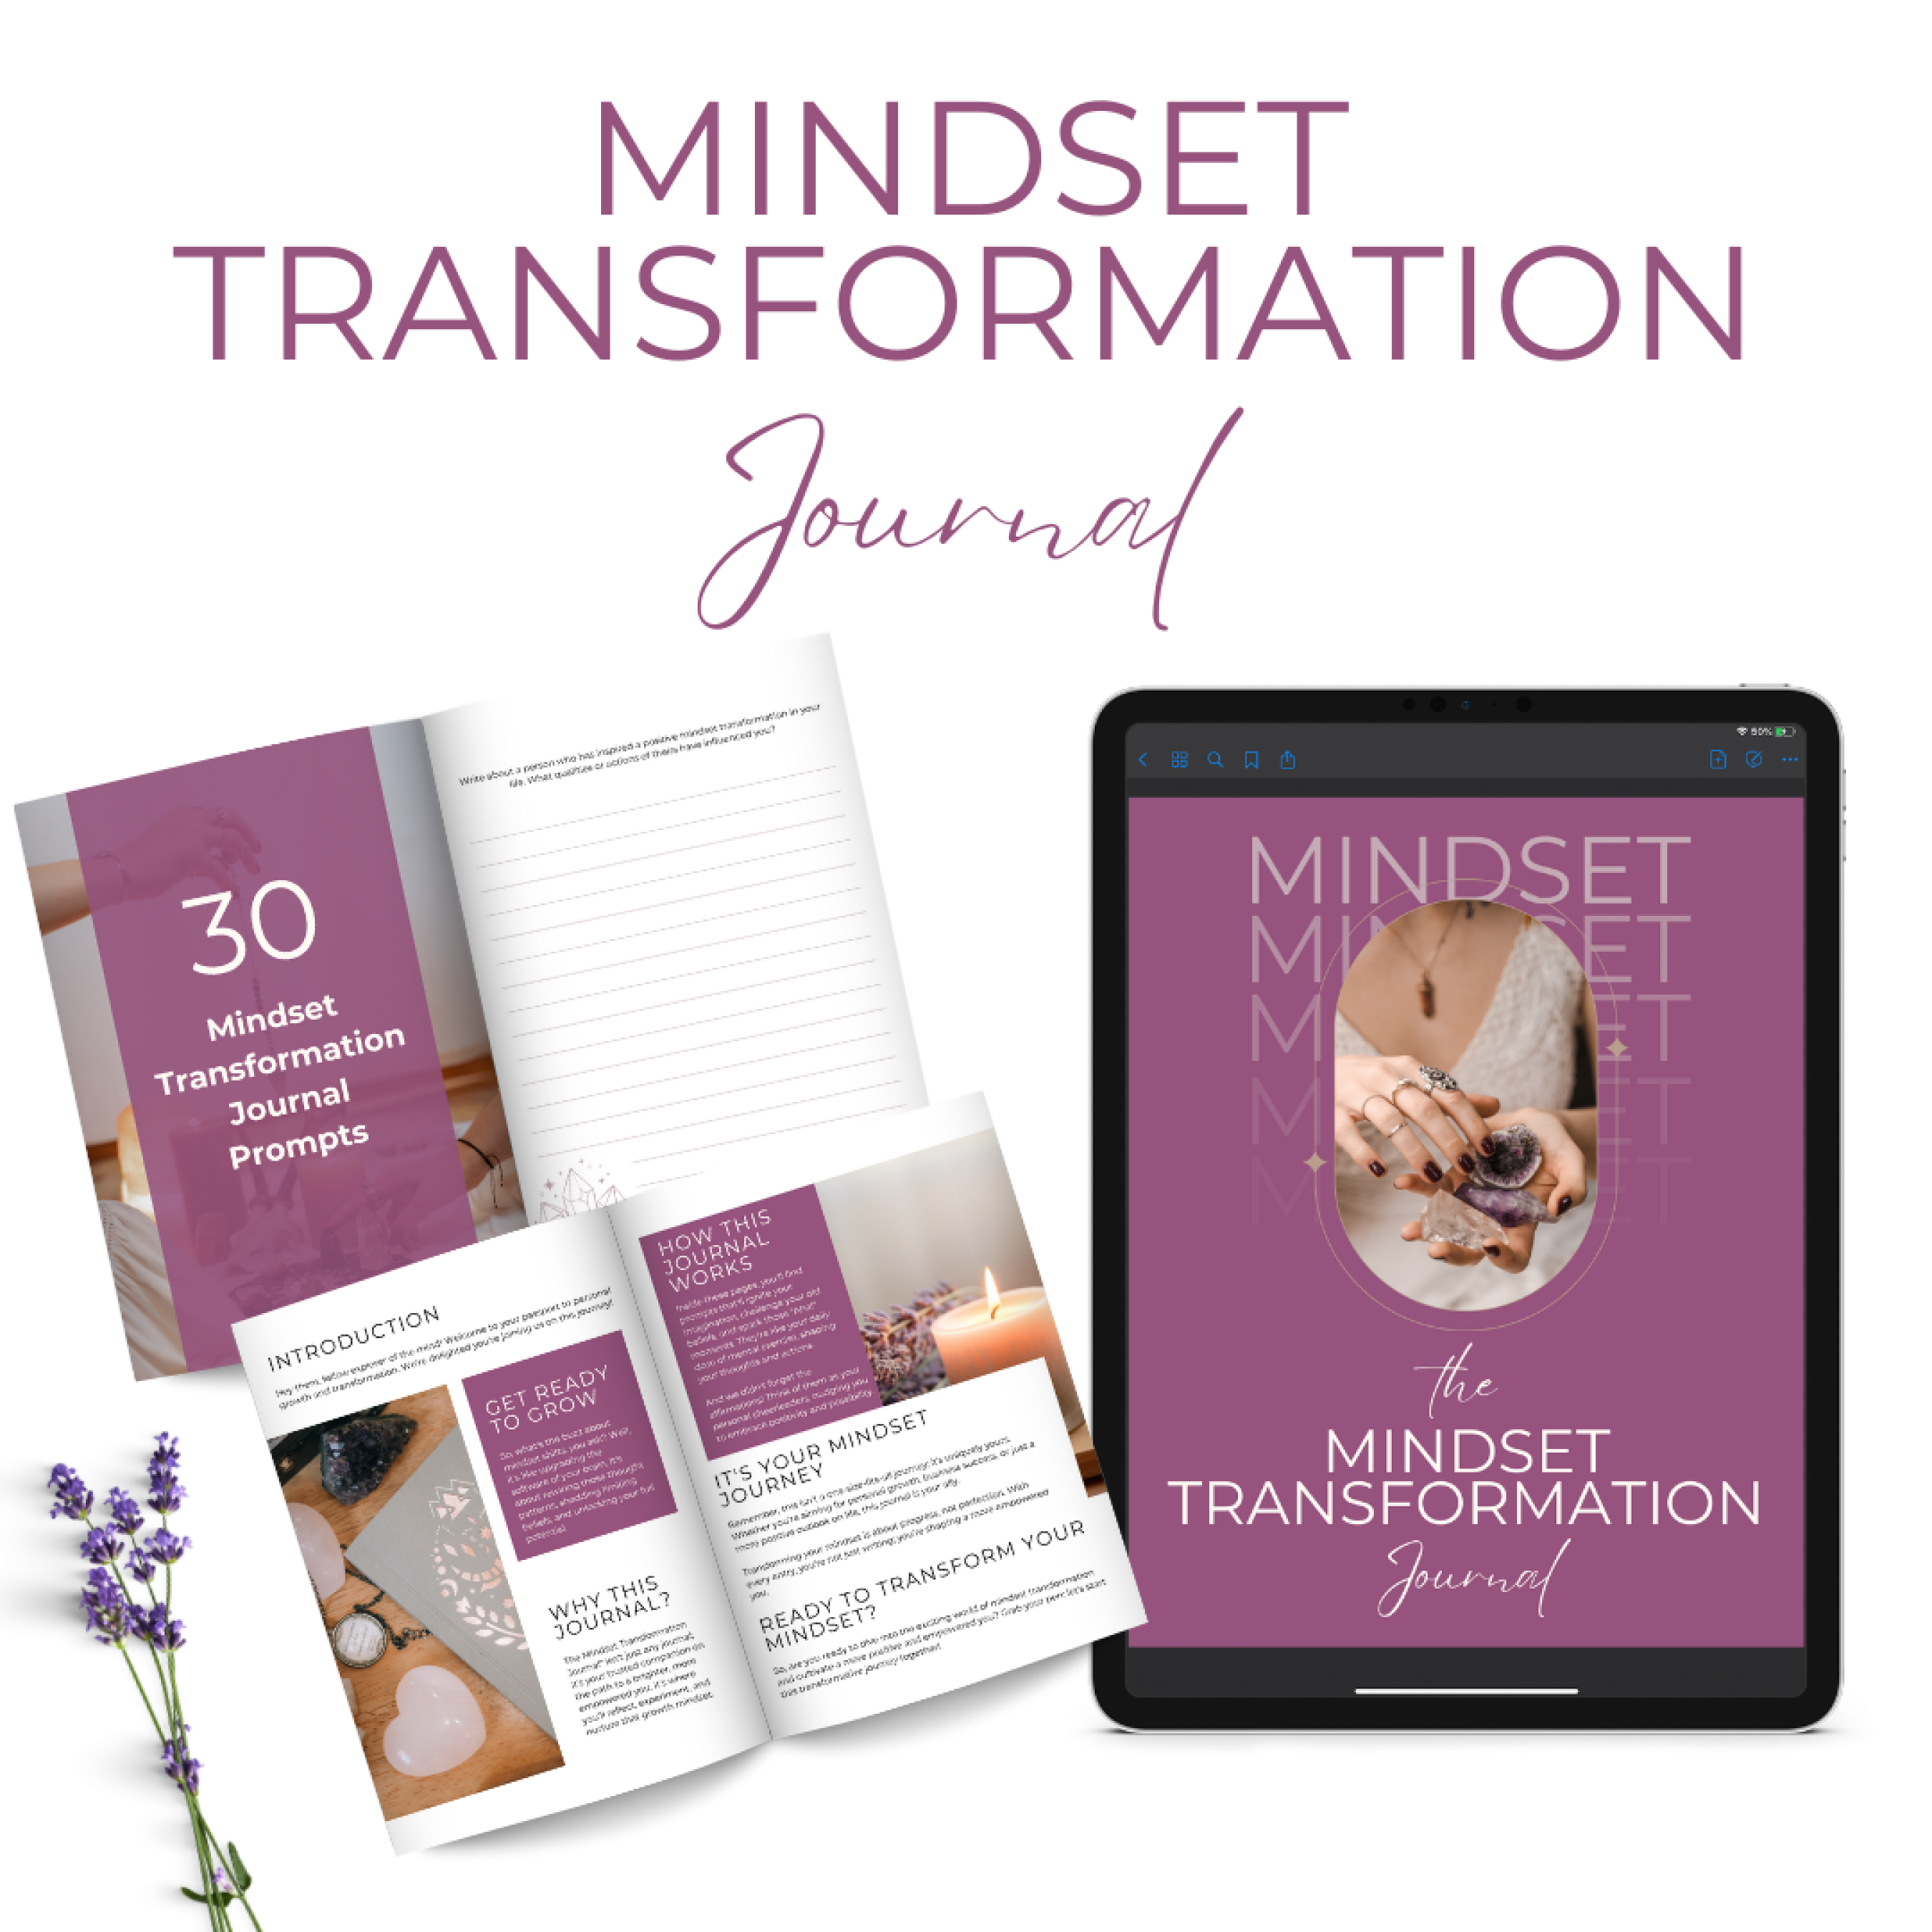 The Mindset Transformation Journal